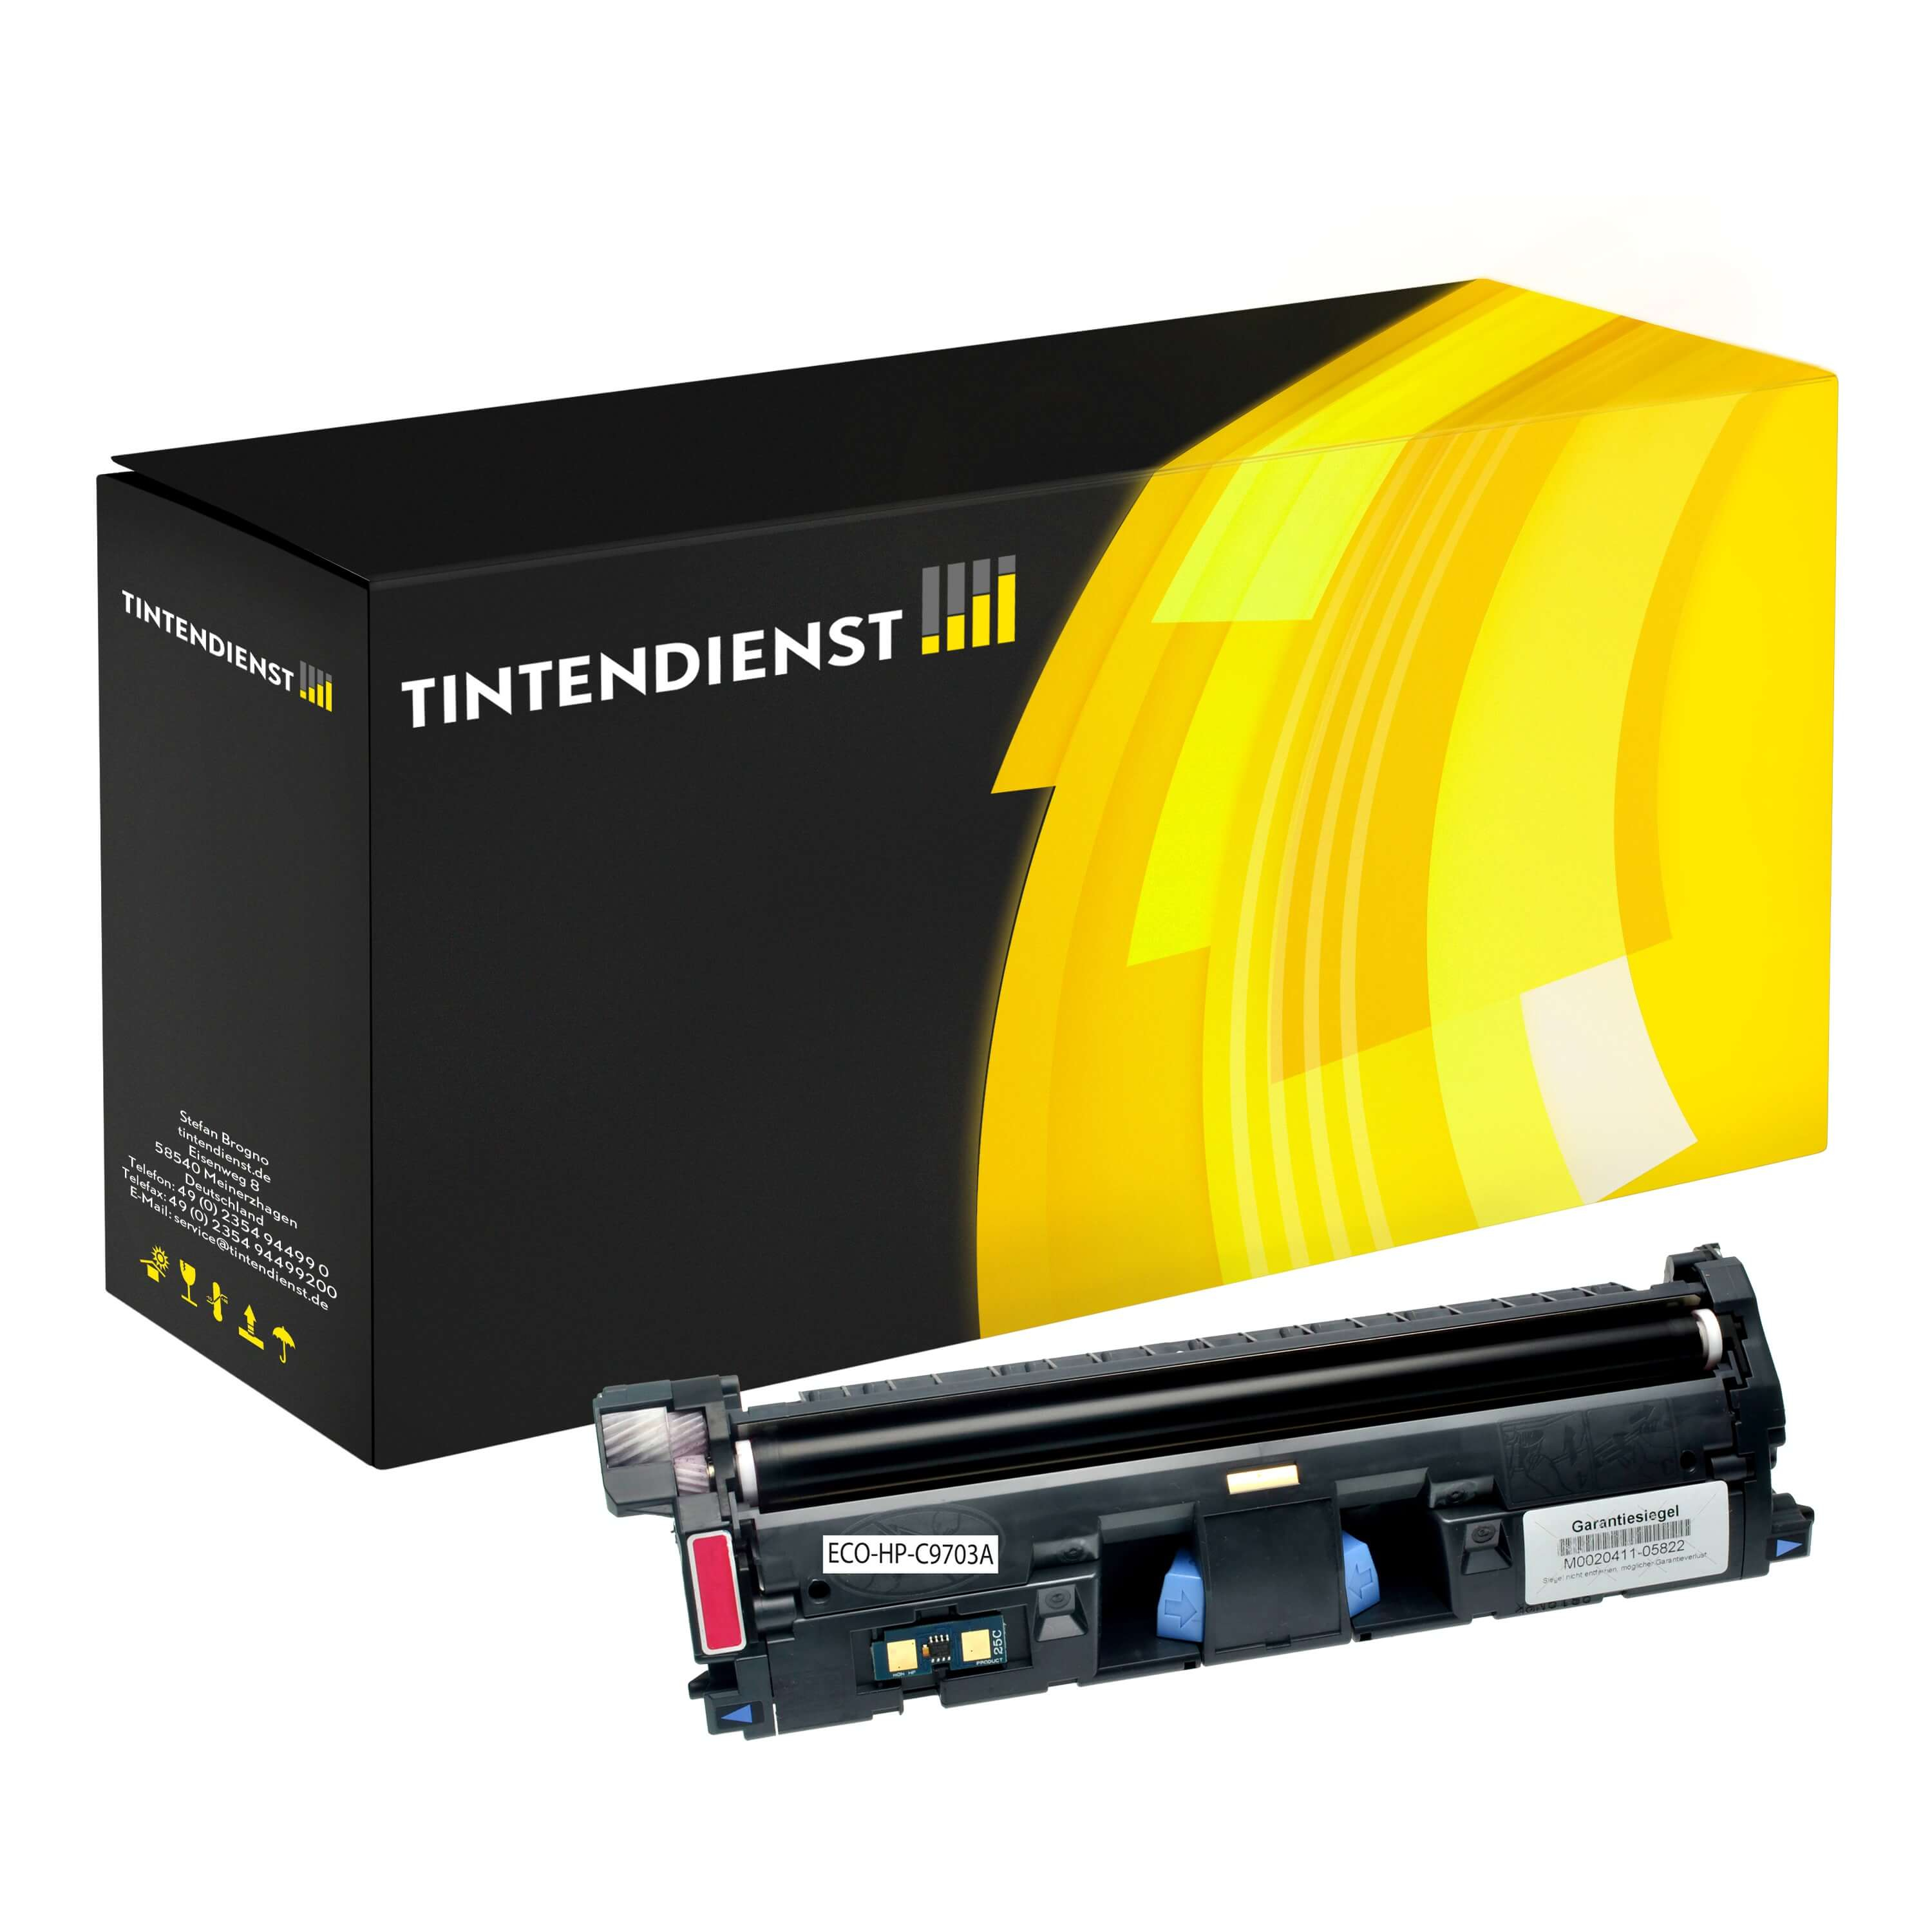 Toner kompatibel für HP Color LaserJet 2500 (C9703A / 121A) Magenta